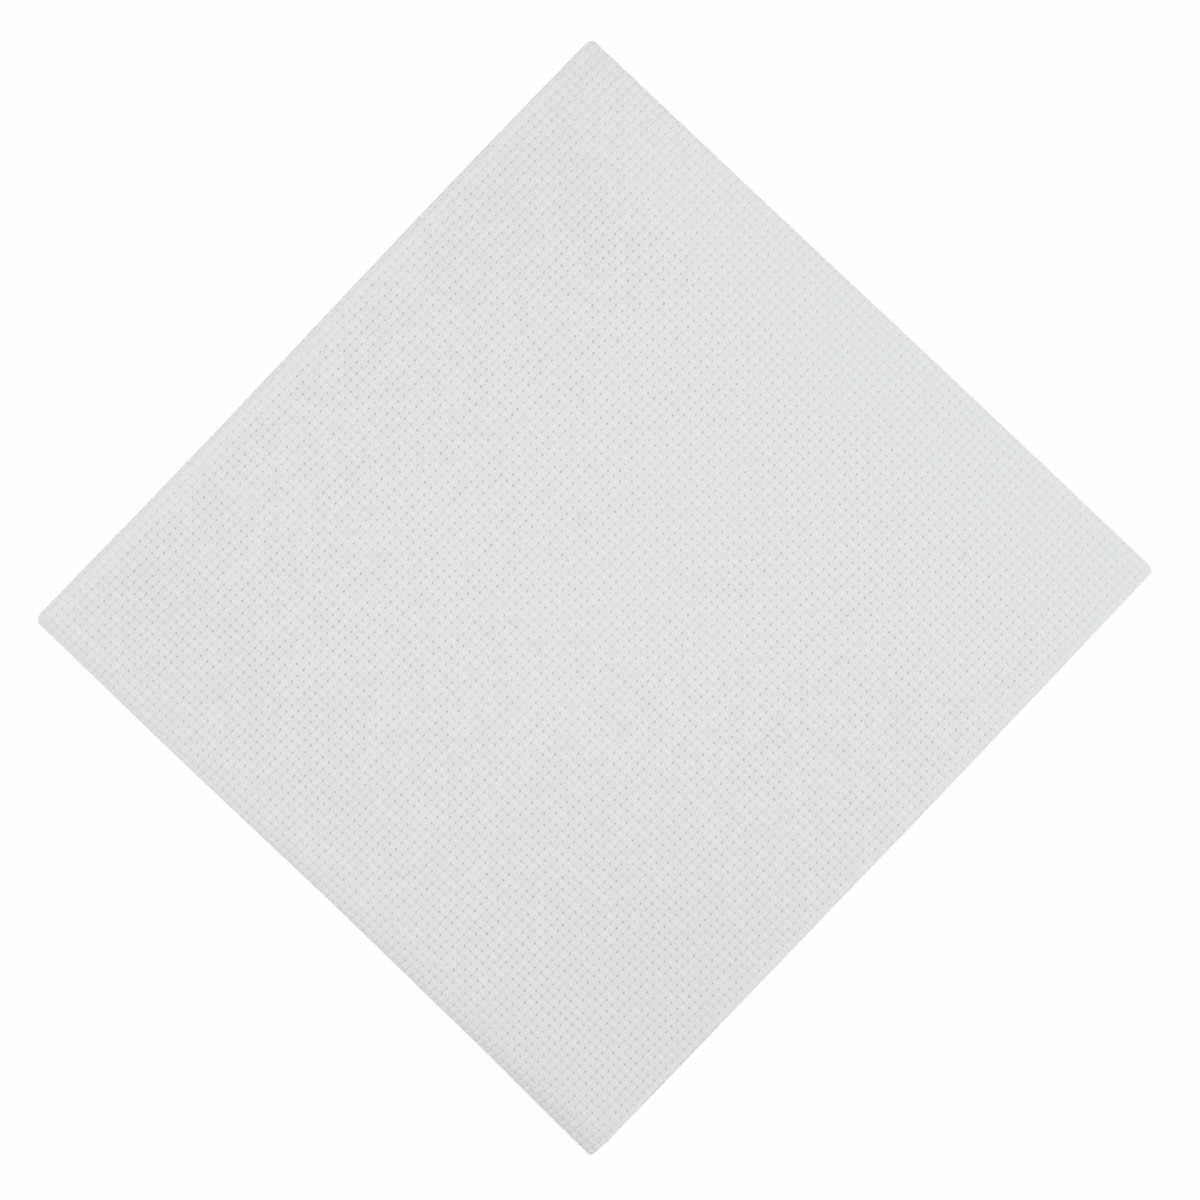 Trimits White Needlecraft Fabric - Aida 16 Count 45 x 30cm